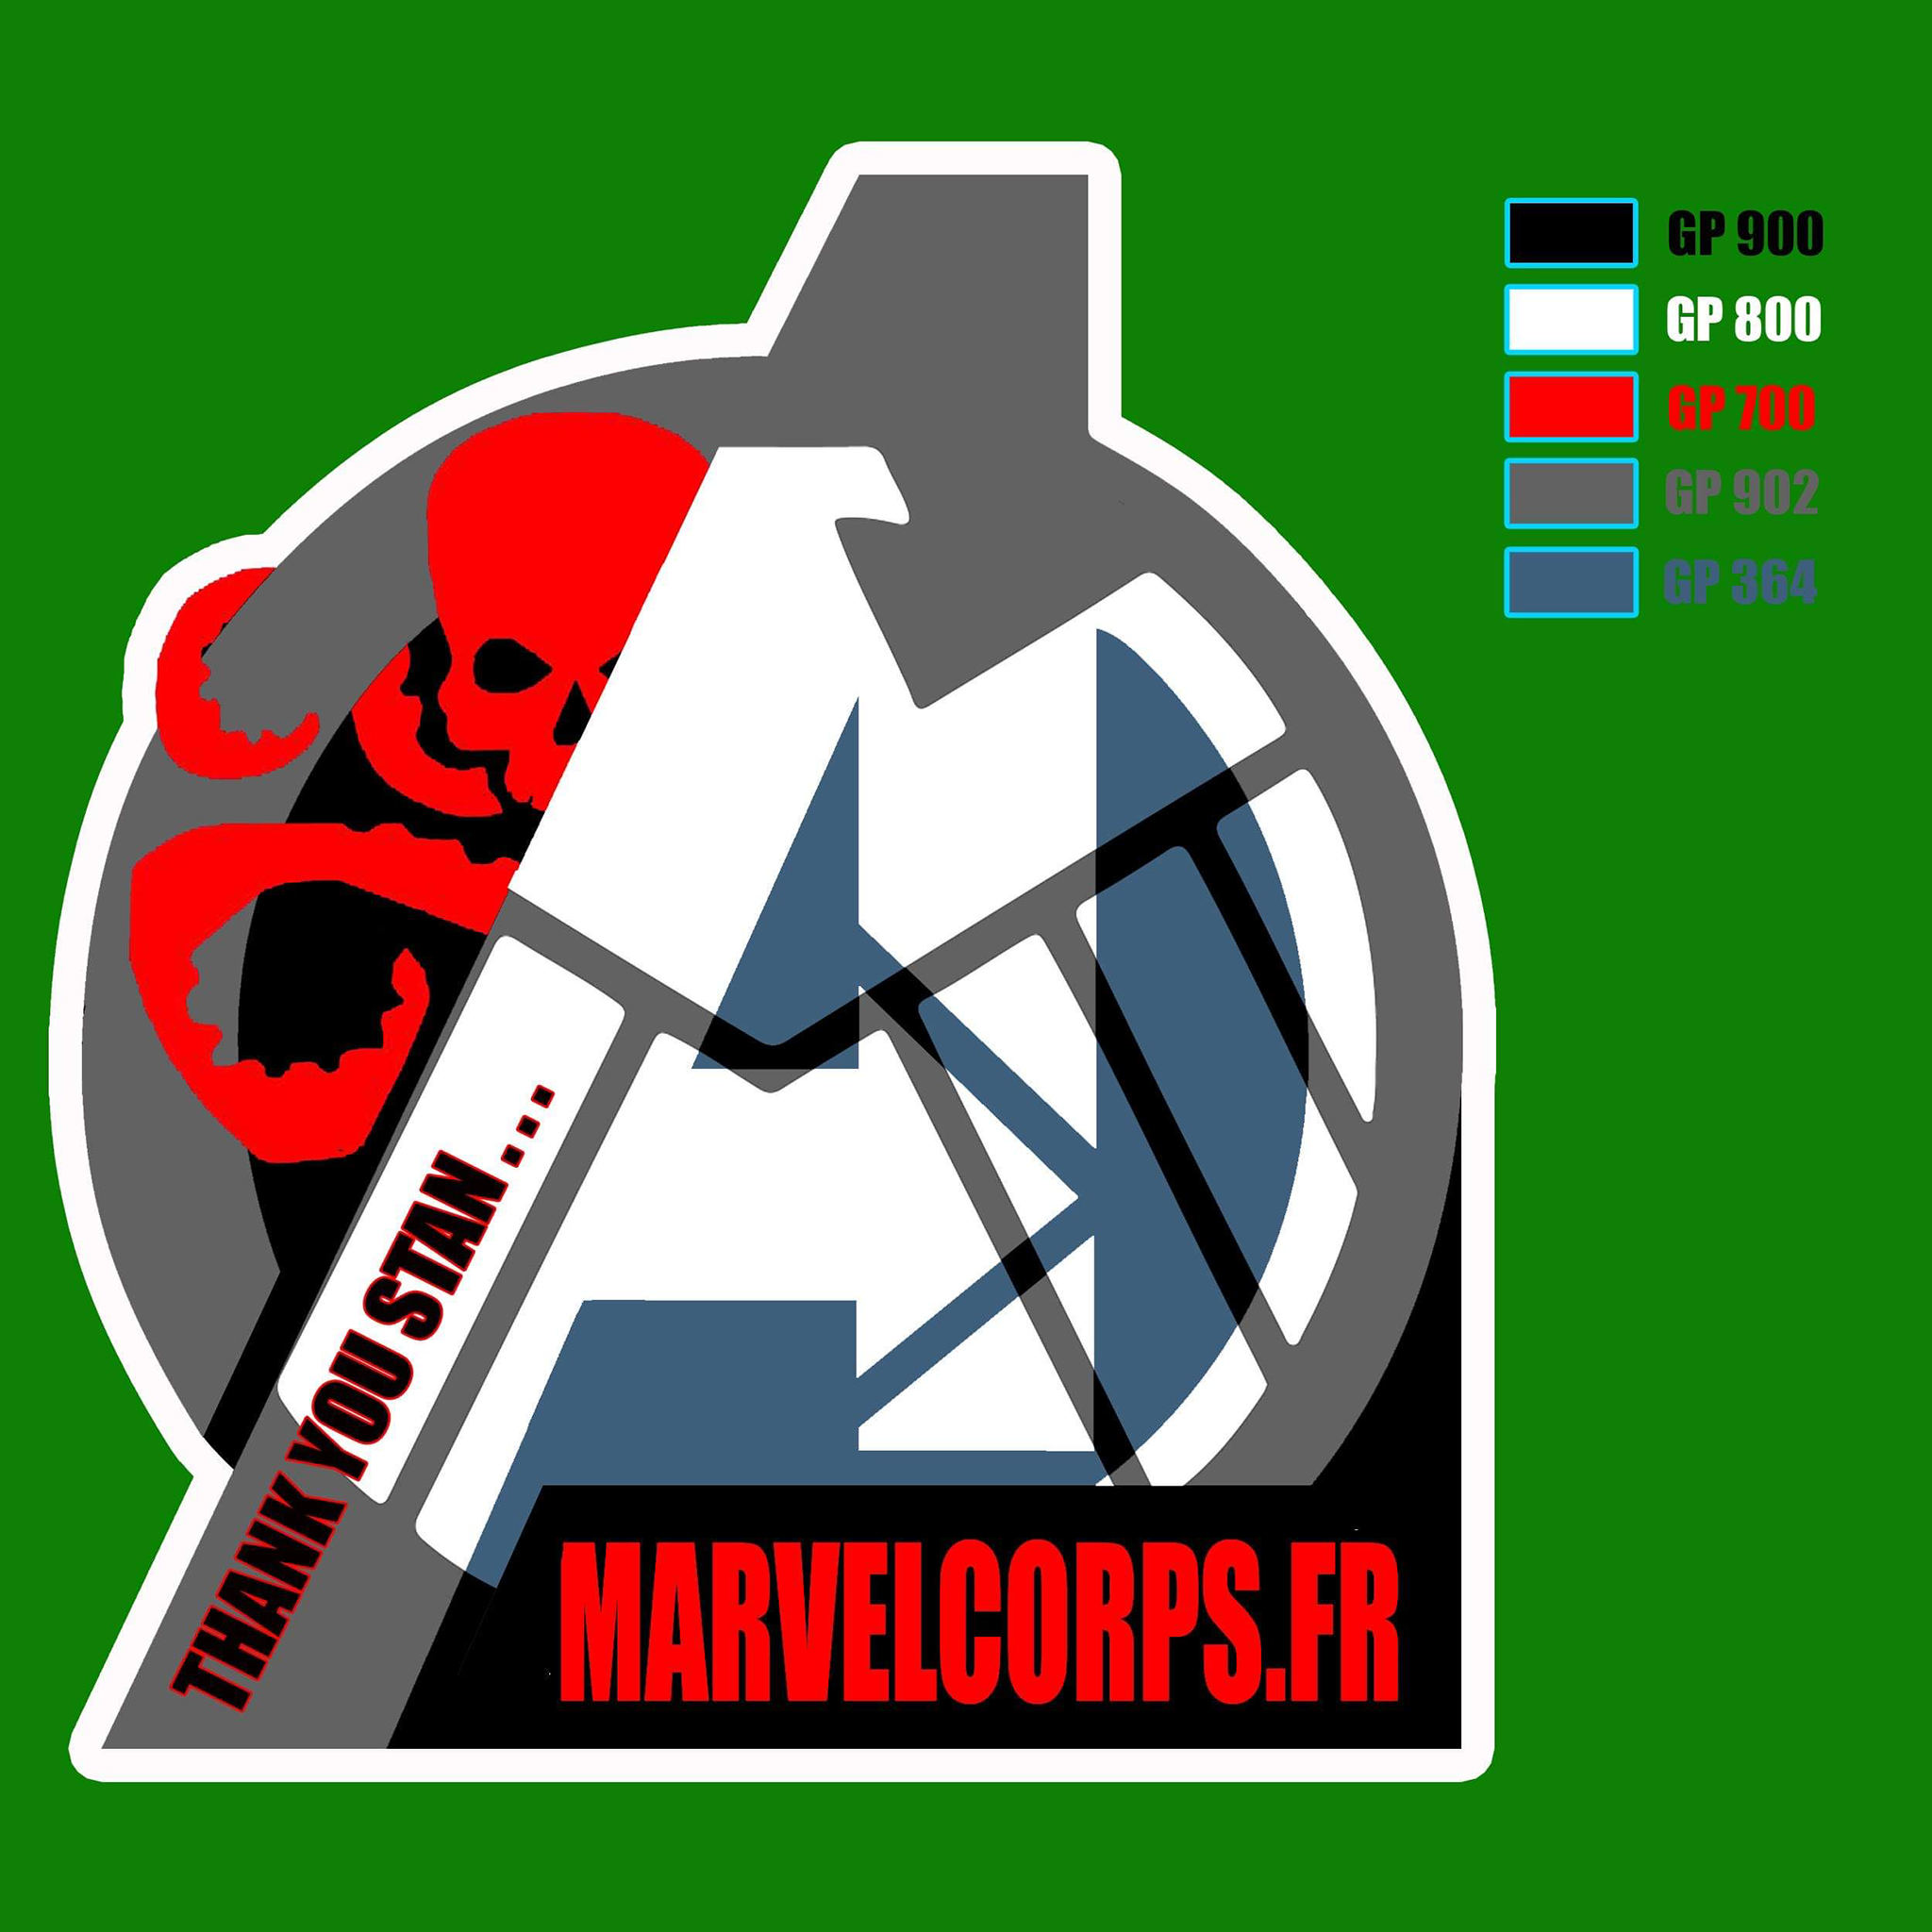 Marvel Corps